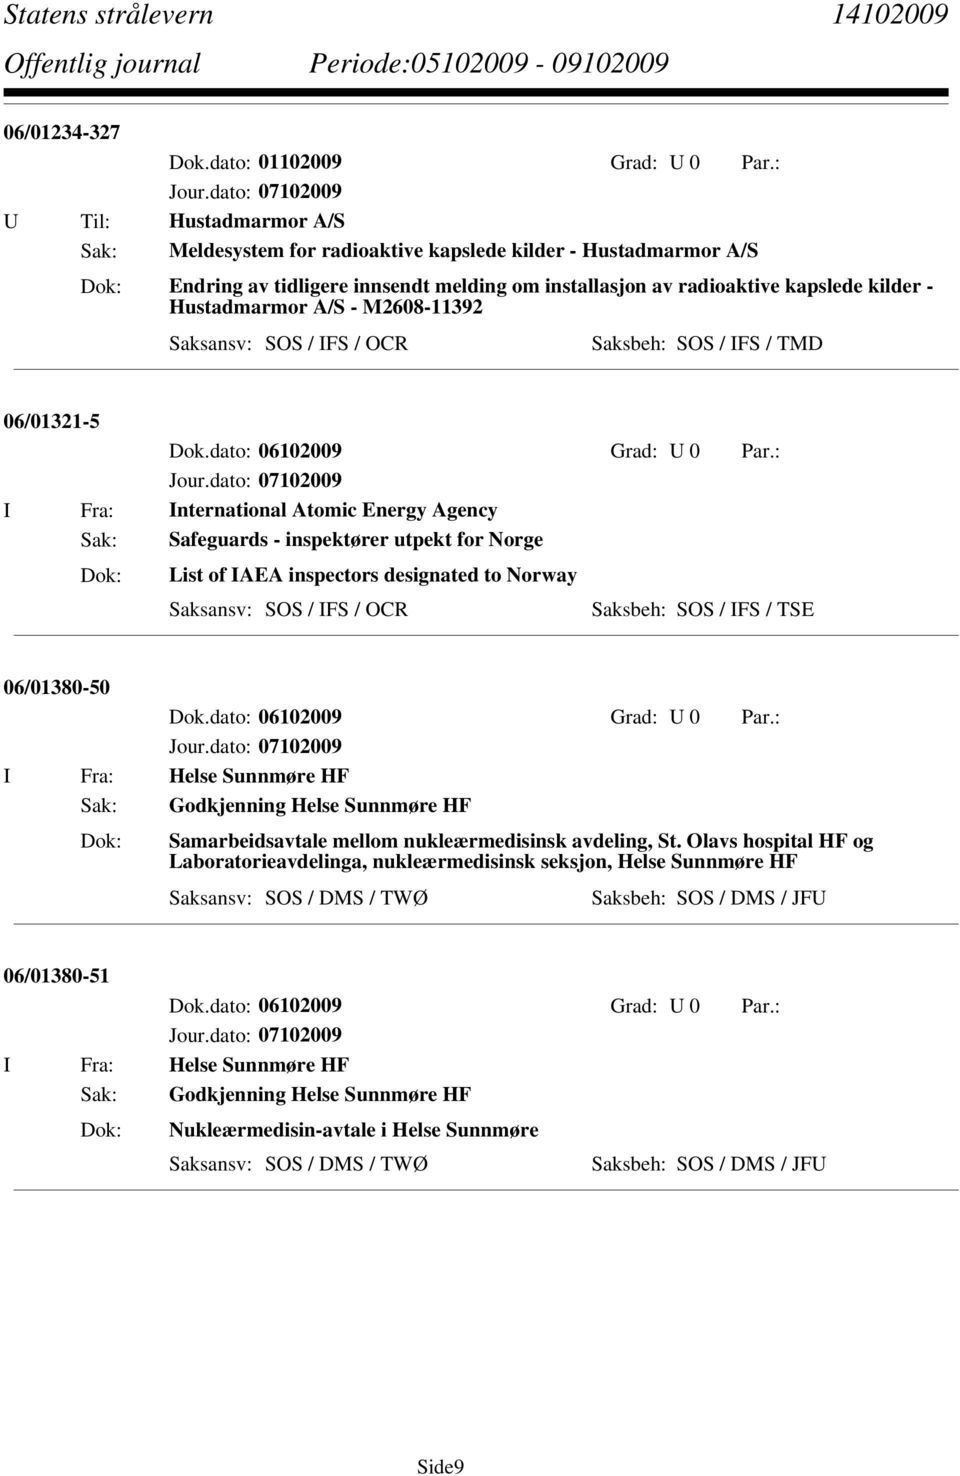 M2608-11392 Saksbeh: SOS / IFS / TMD 06/01321-5 I Fra: International Atomic Energy Agency Sak: Safeguards - inspektører utpekt for Norge List of IAEA inspectors designated to Norway Saksbeh: SOS /